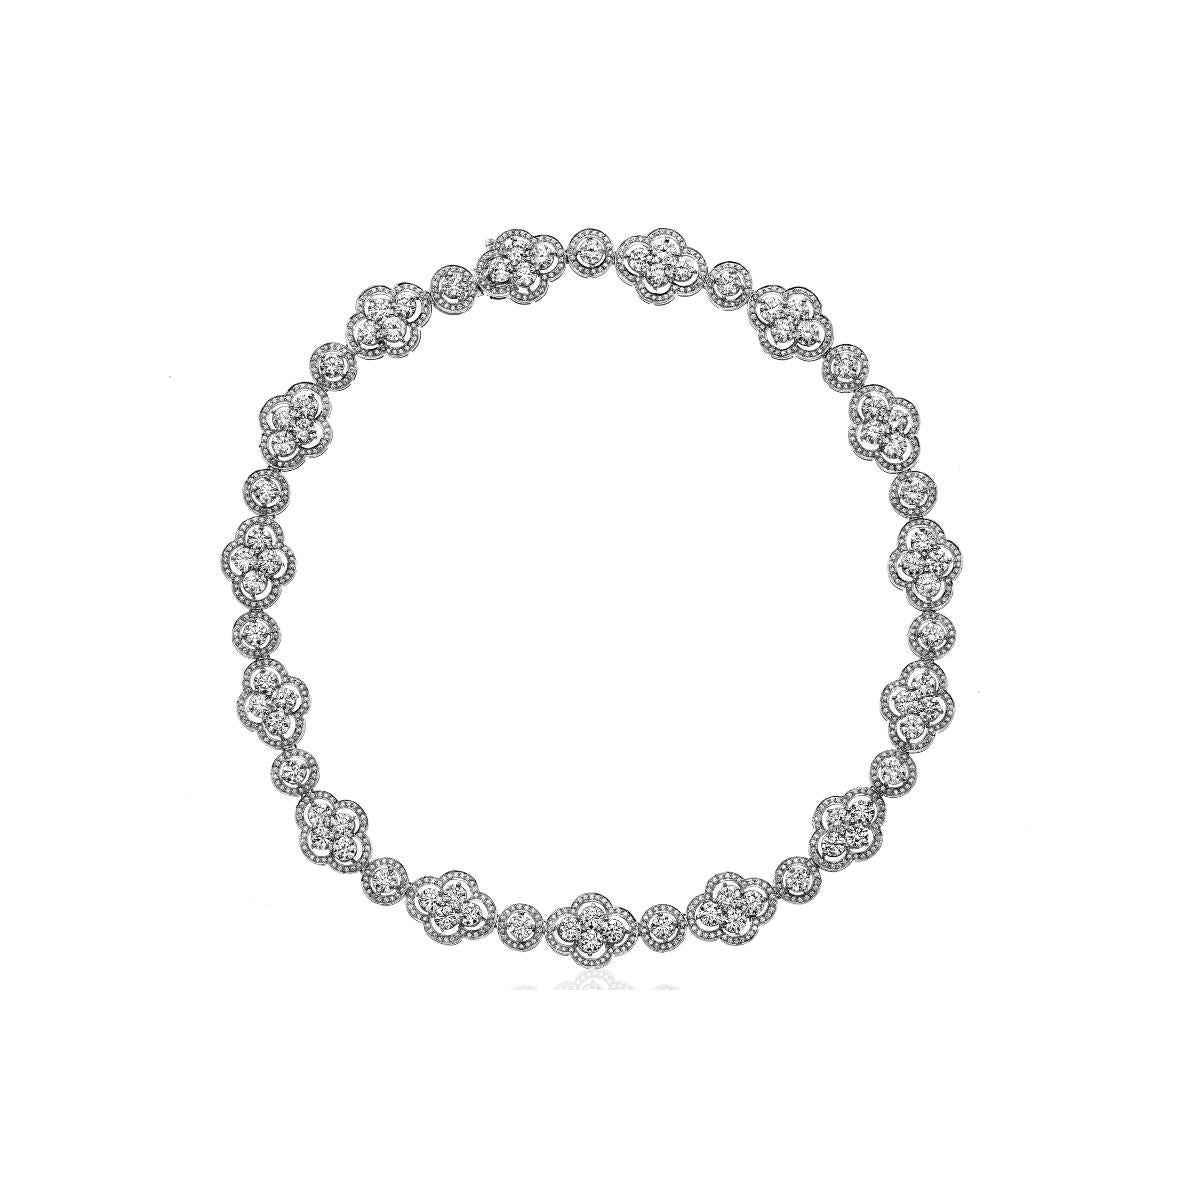 Round Brilliant and Marquise Diamond Wreath Necklace